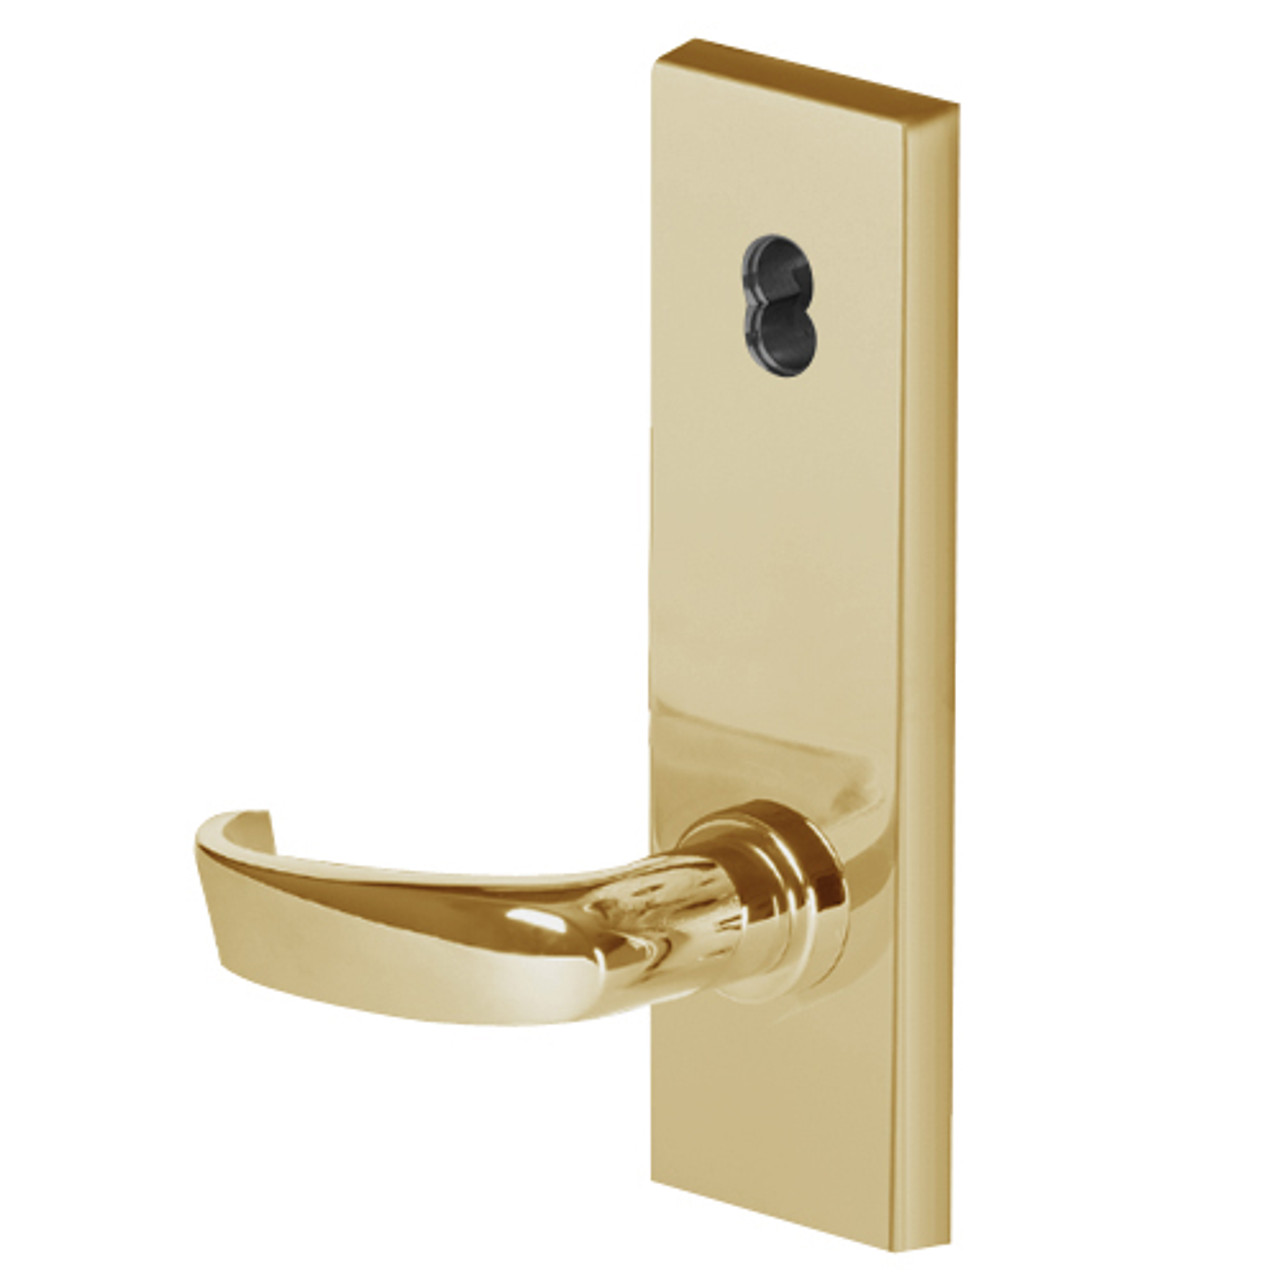 45HW7TDEL14N606 Best 40HW series Single Key Deadbolt Fail Safe Electromechanical Mortise Lever Lock with Curved w/ Return Style in Satin Brass